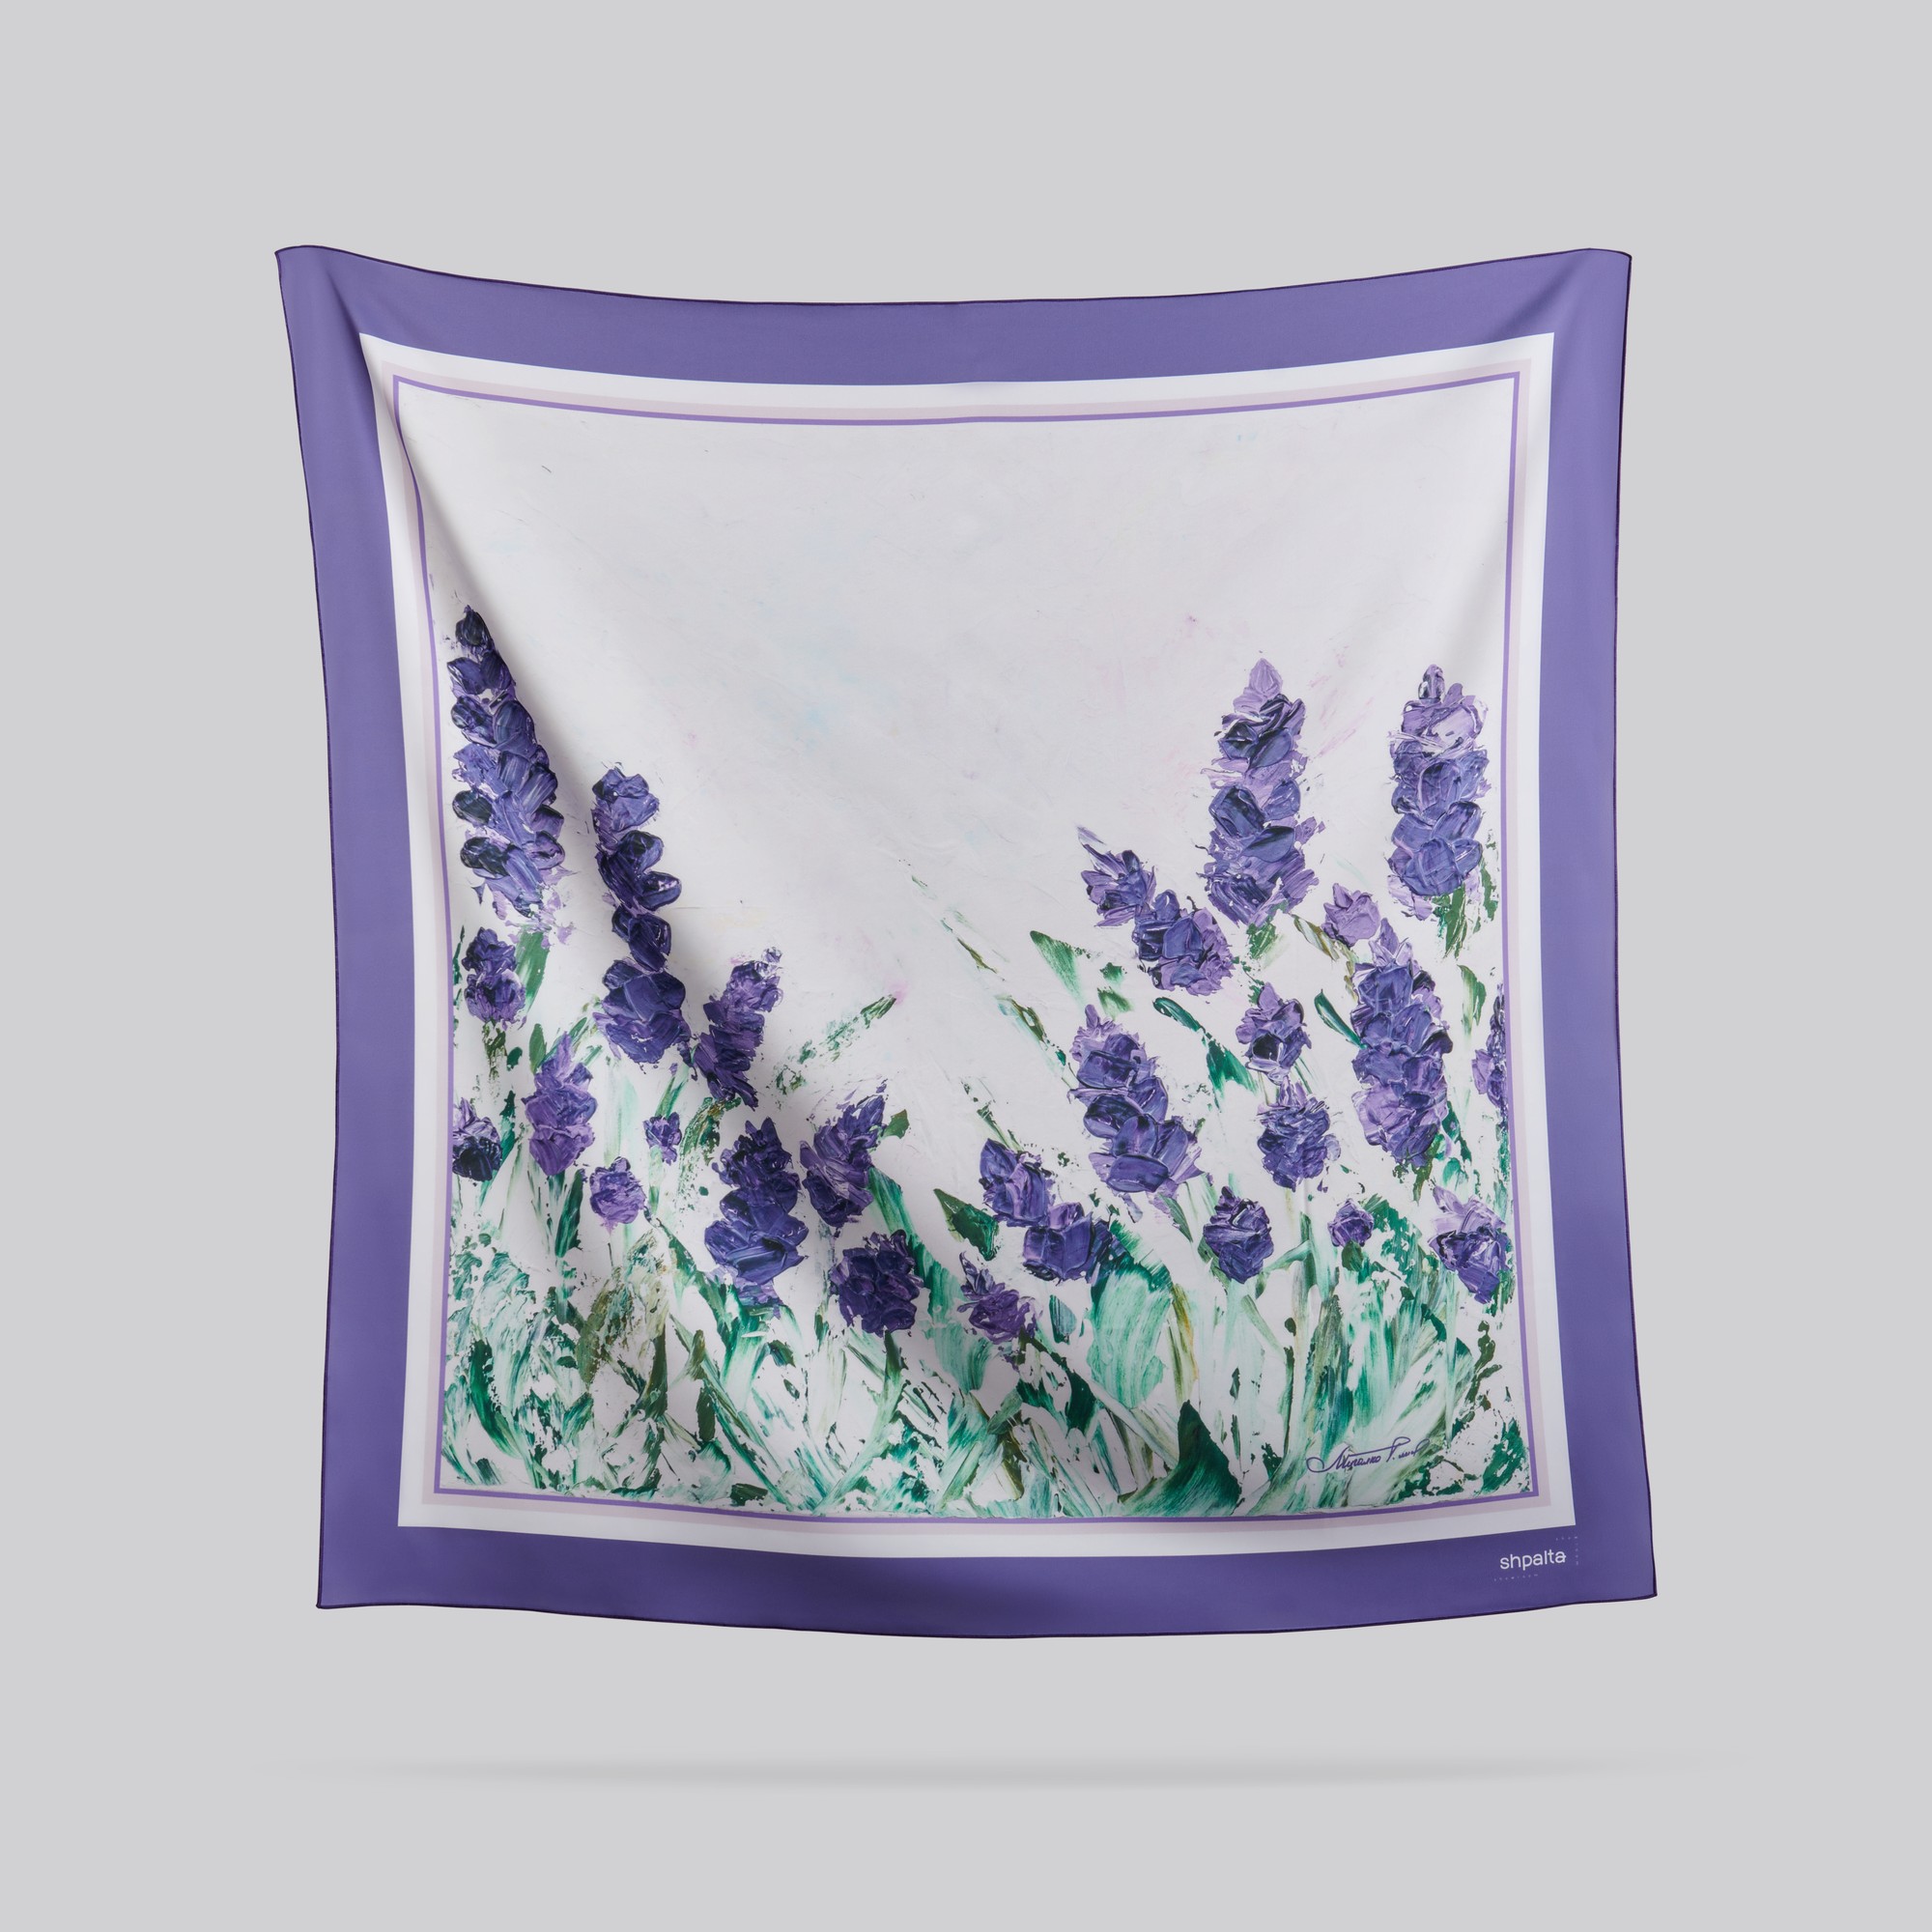 Lavender silk shawl 85*85 cm women’s accessories customised scarf neck accessory from Ukraine